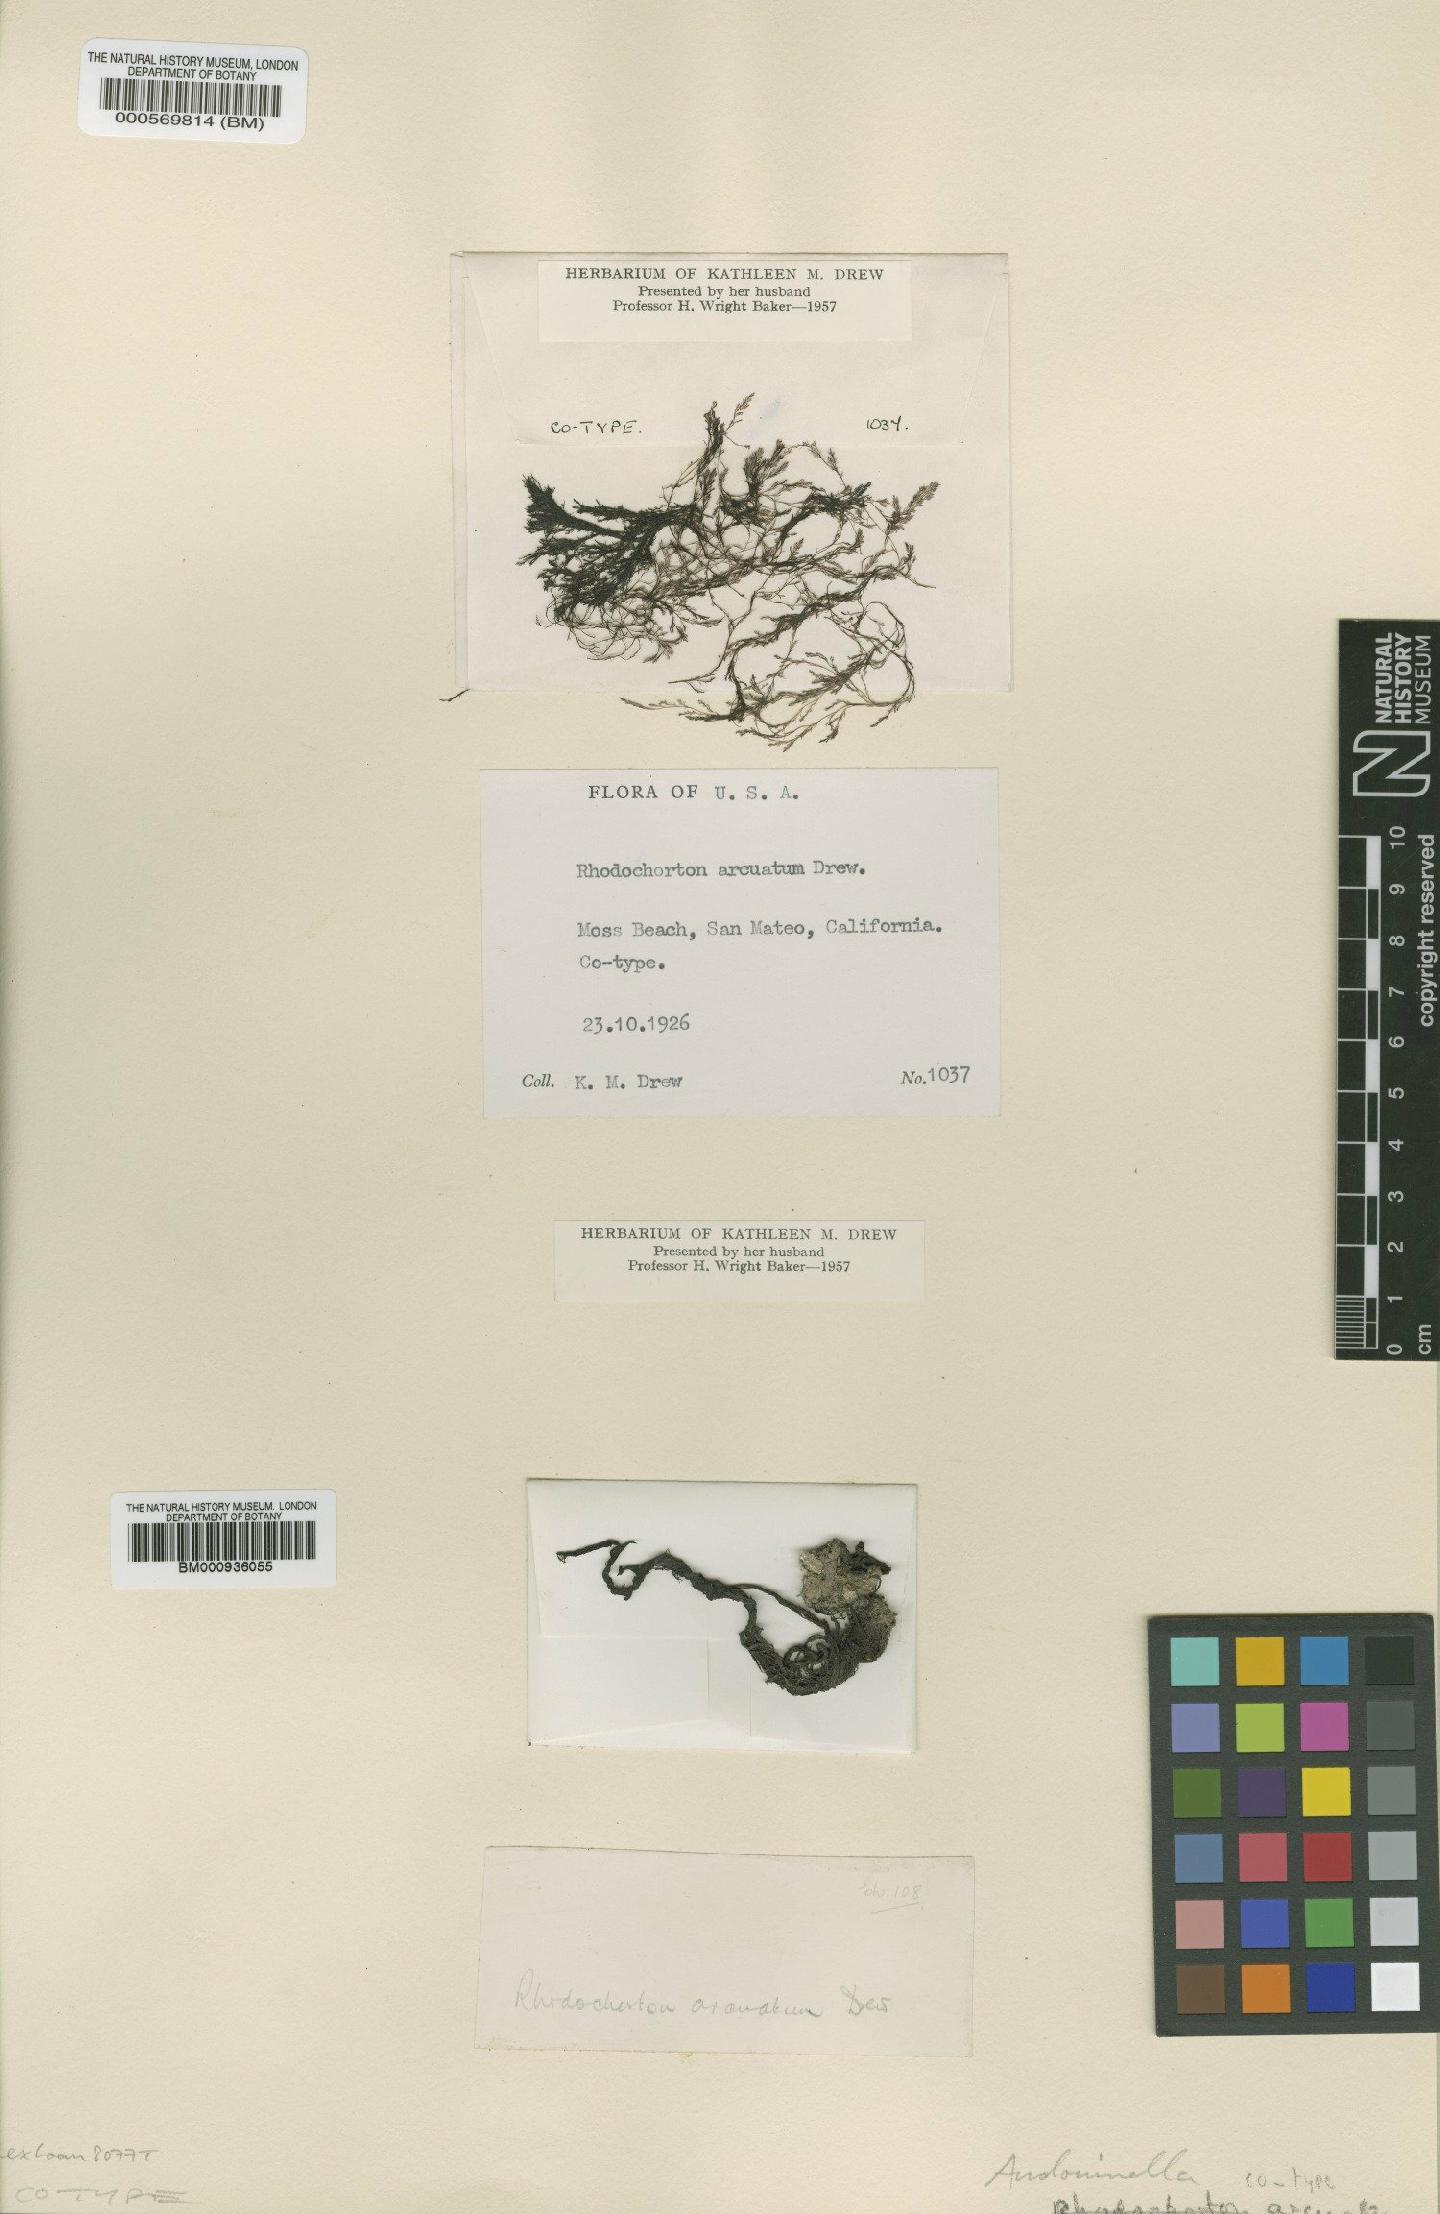 To NHMUK collection (Acrochaetium arcuatum K.M.Drew; Type; NHMUK:ecatalogue:432631)